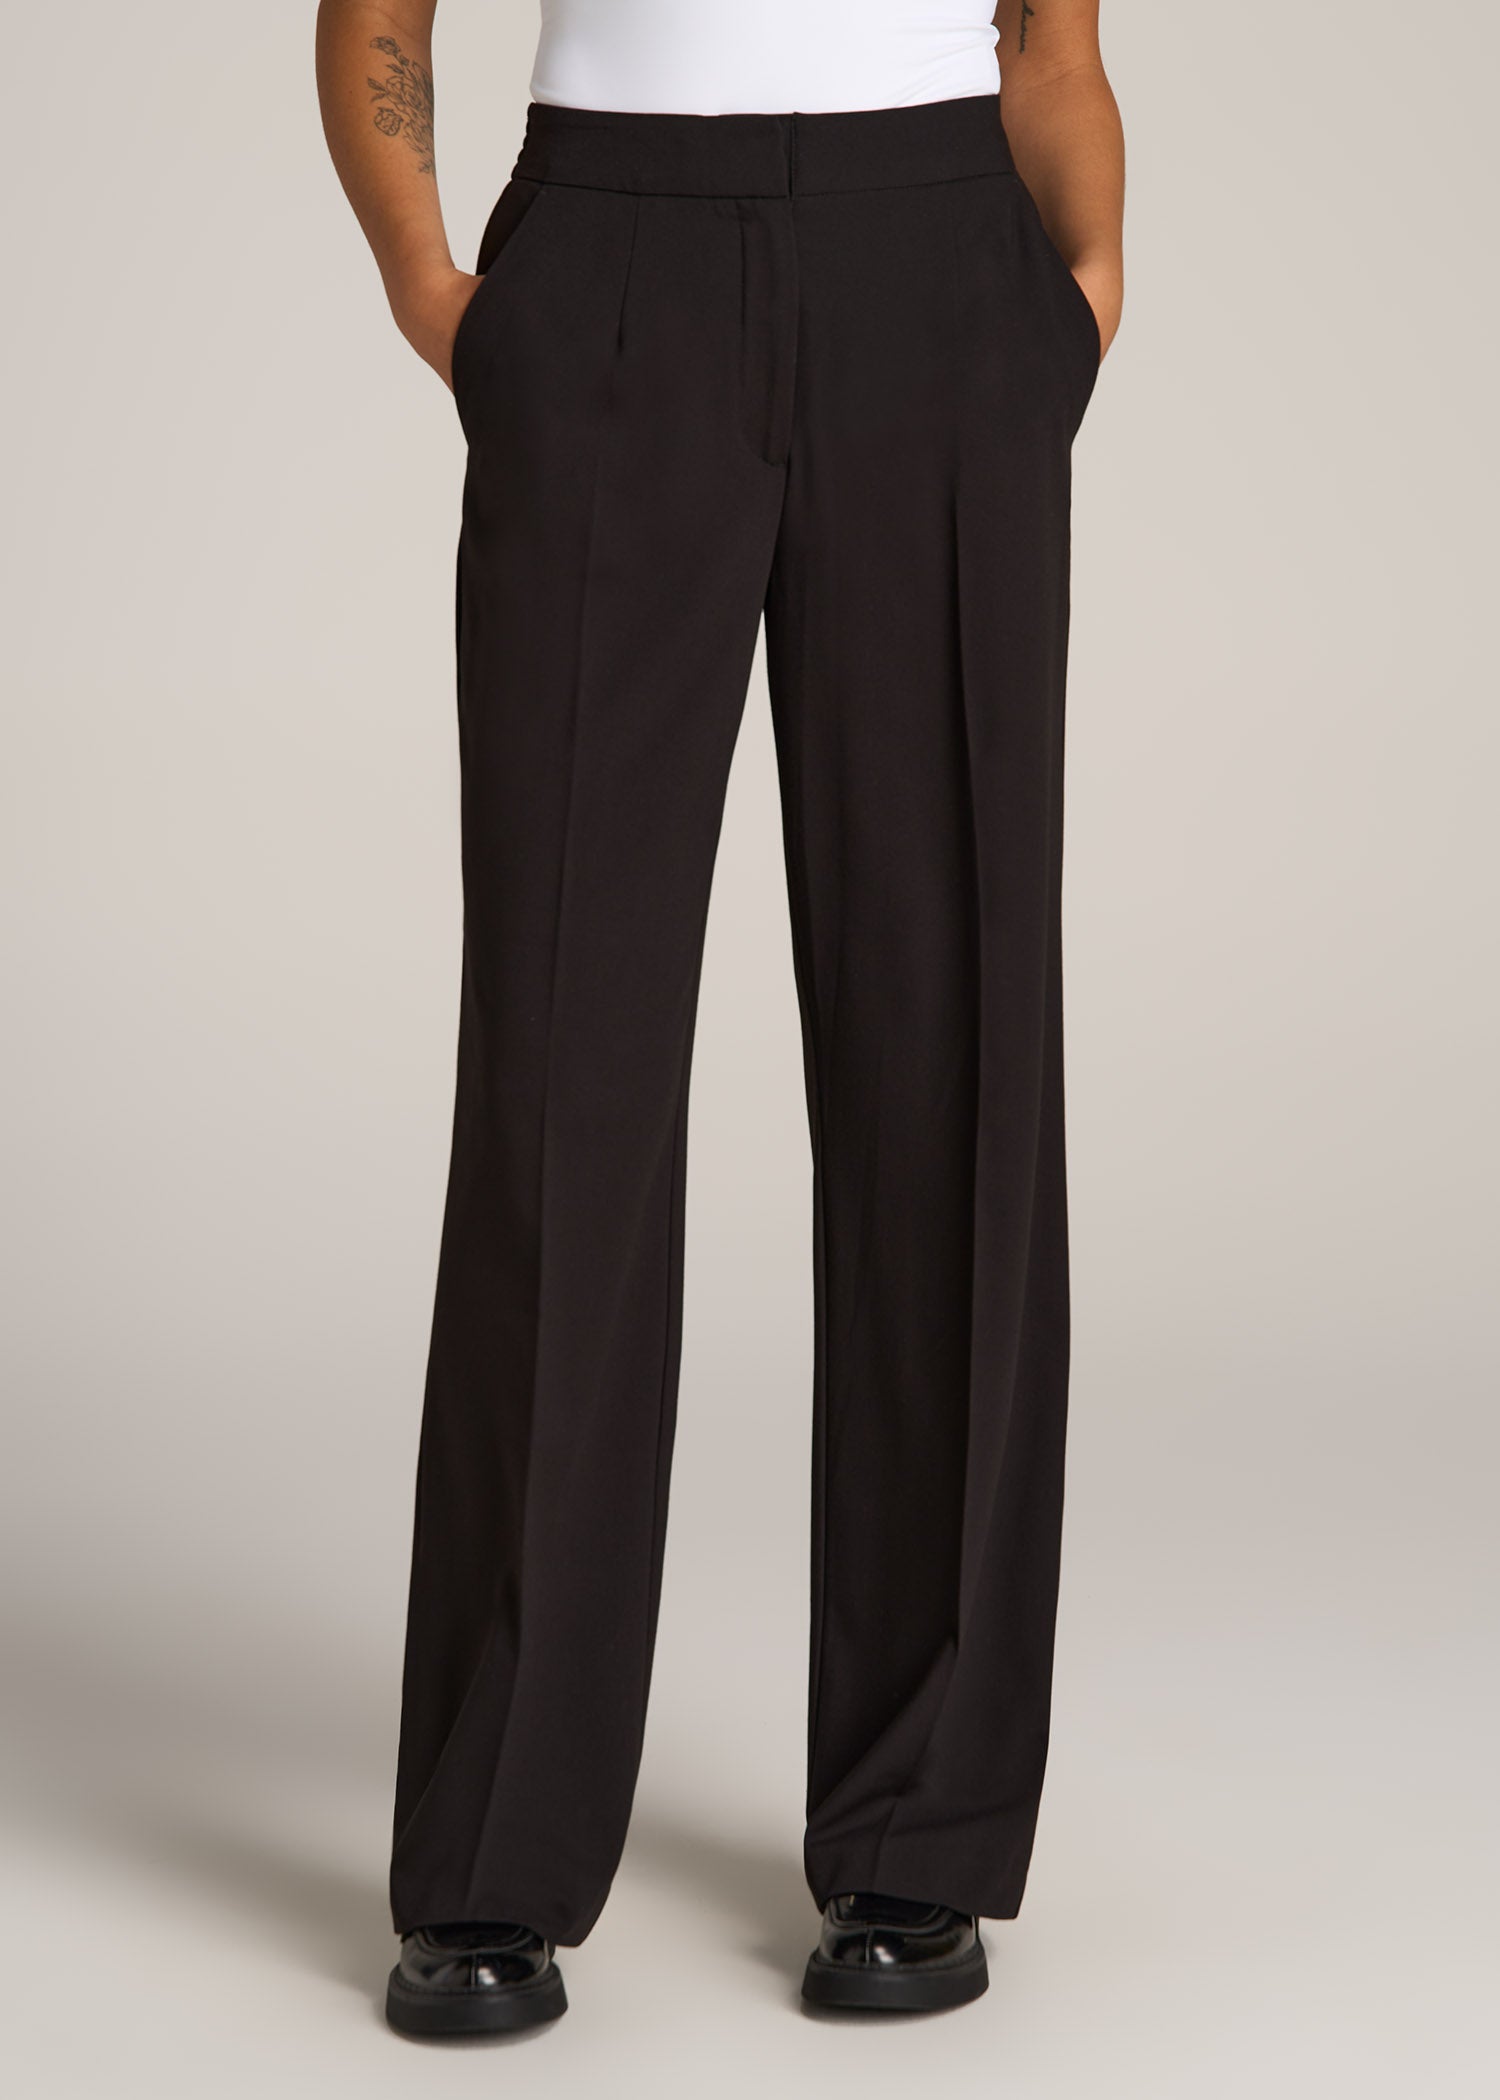 Brilliant Basics Women's Short Length Skinny Work Pant - Black - Size 8